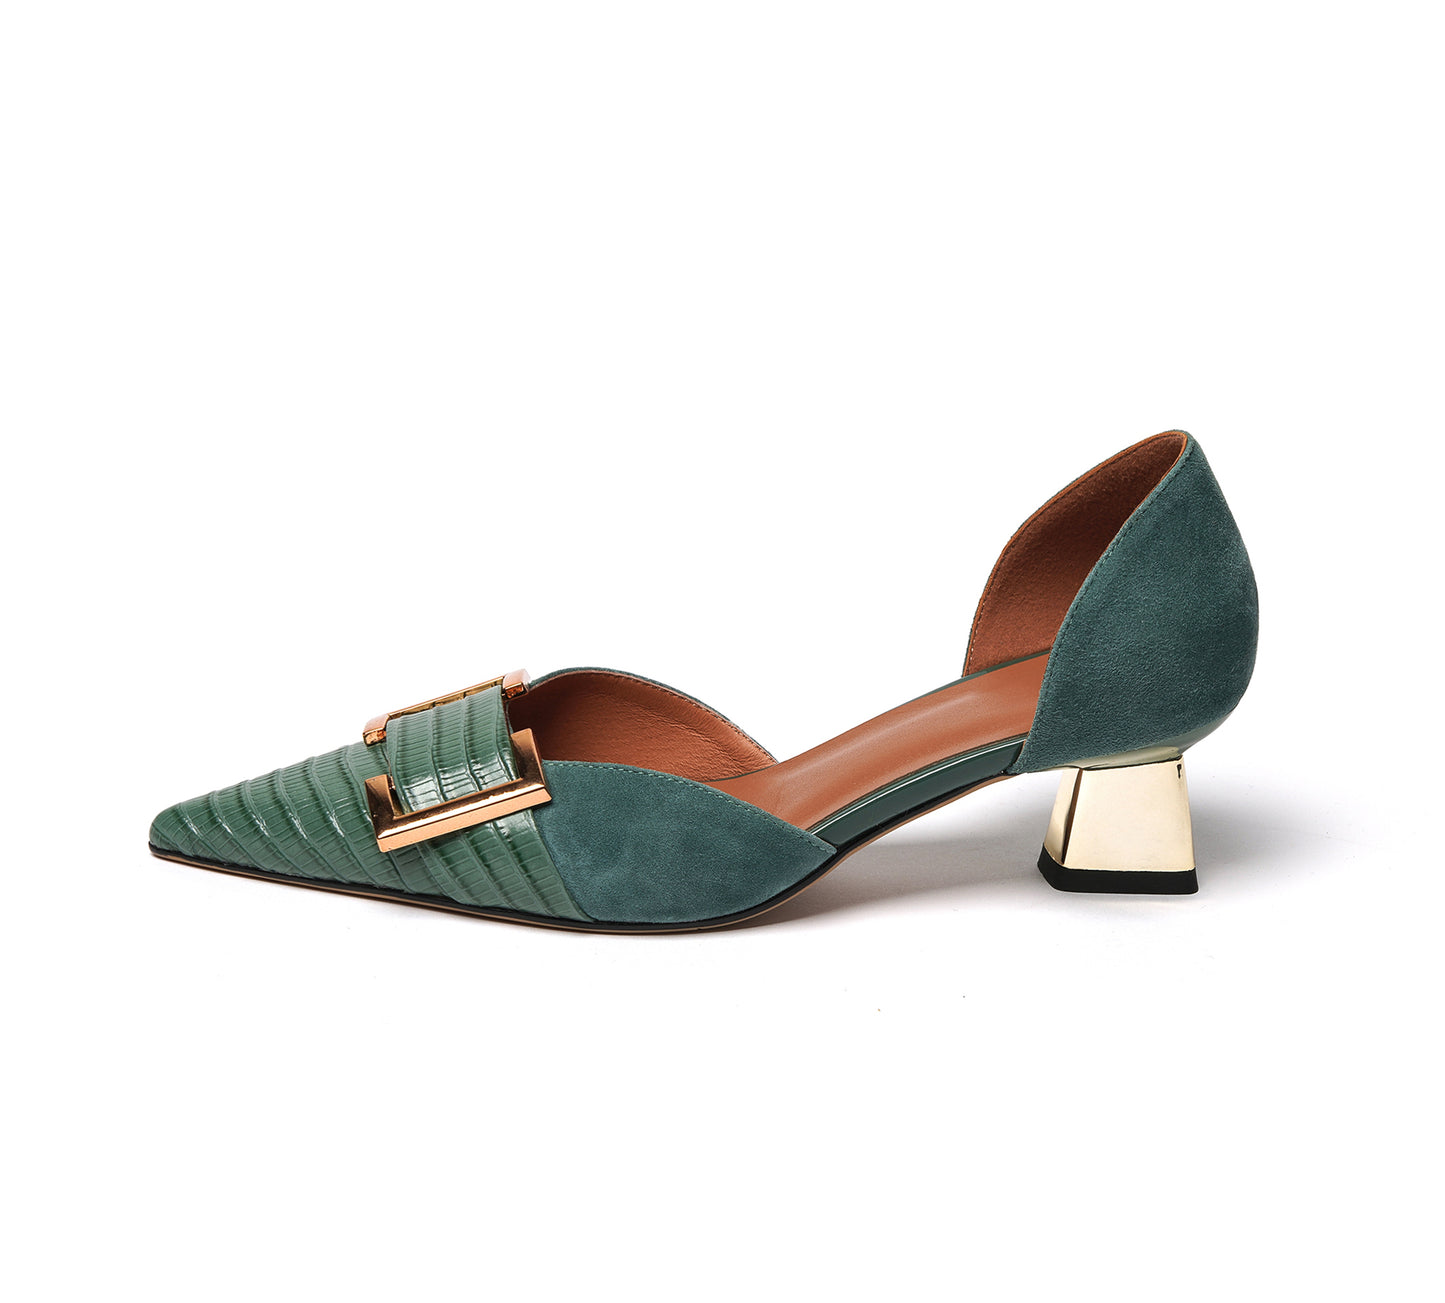 TinaCus Women's Pointed Toe Handmade Buckle Genuine/Suede Leather Slip On Low Heel Pump Shoes